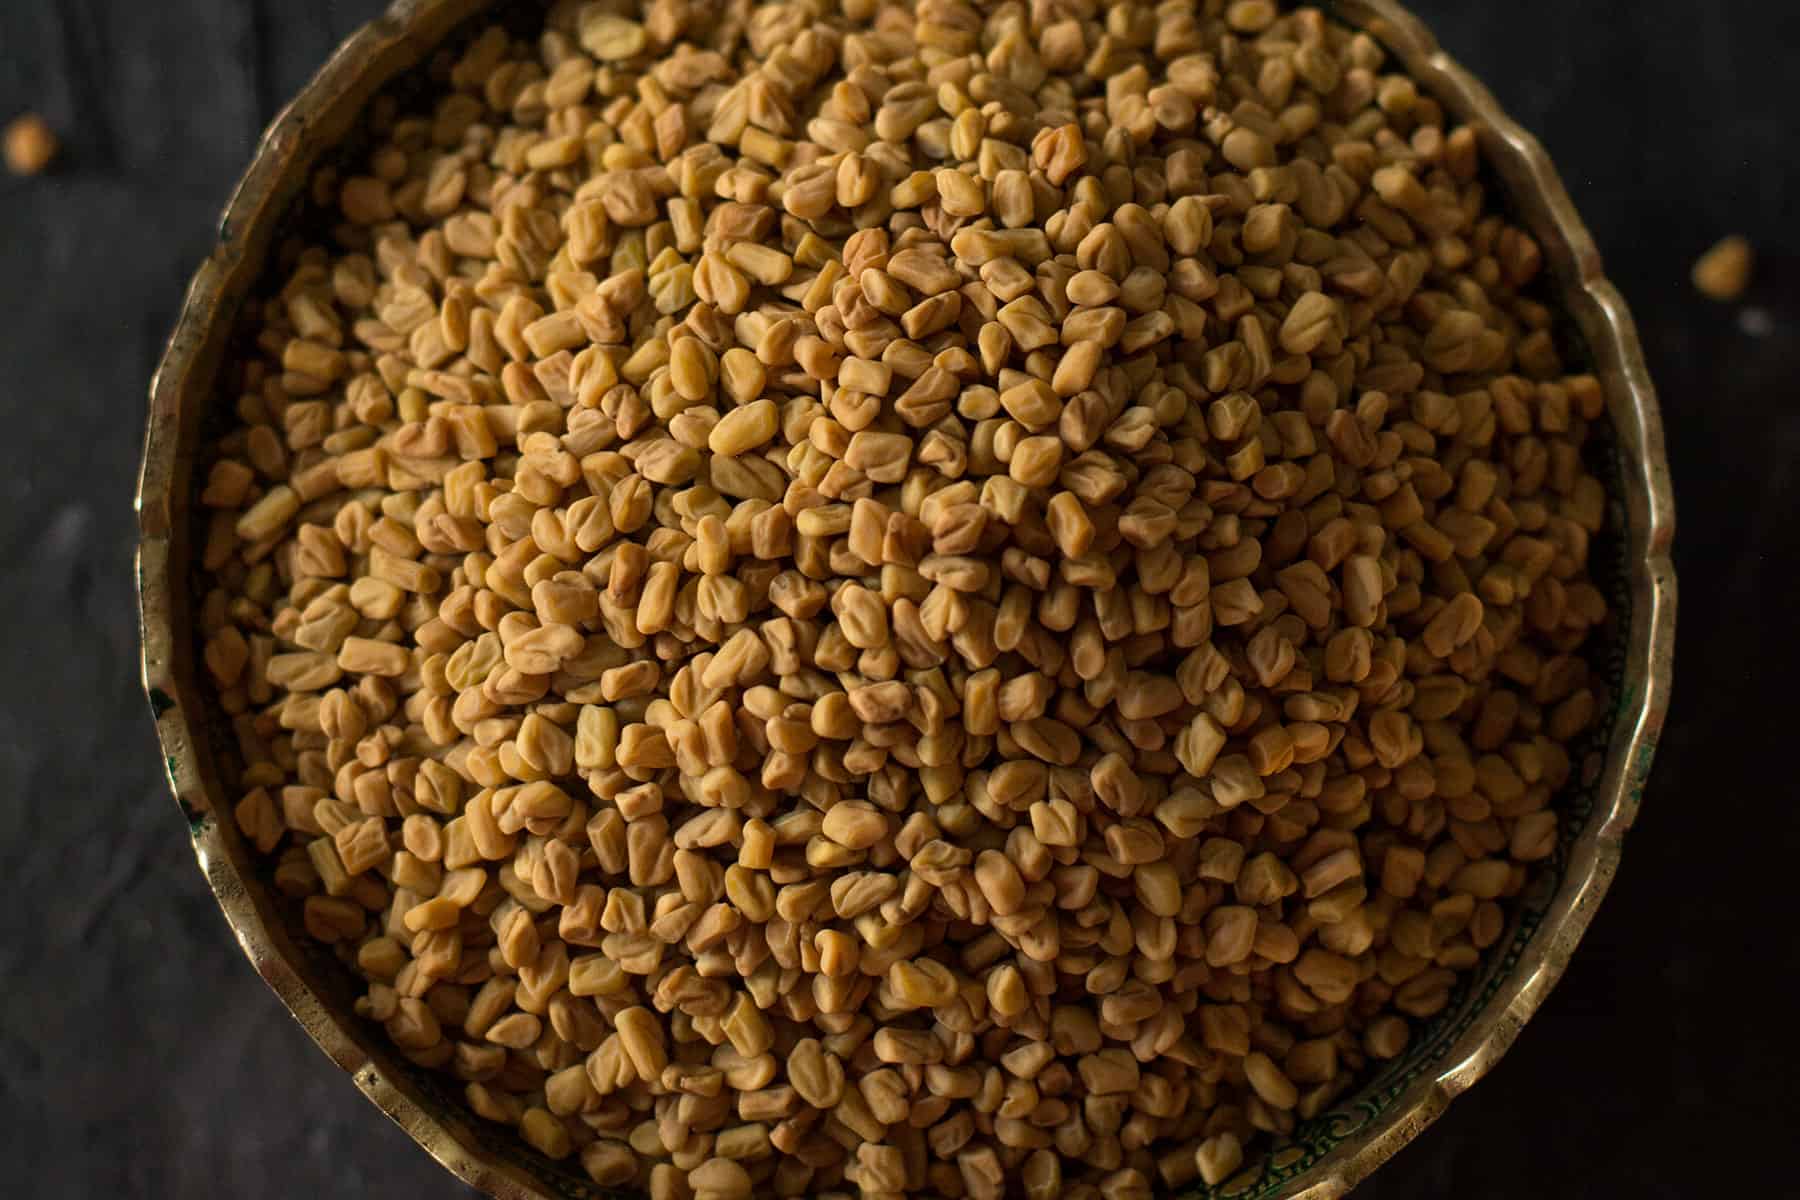 fenugreek seeds in a decorative bowl